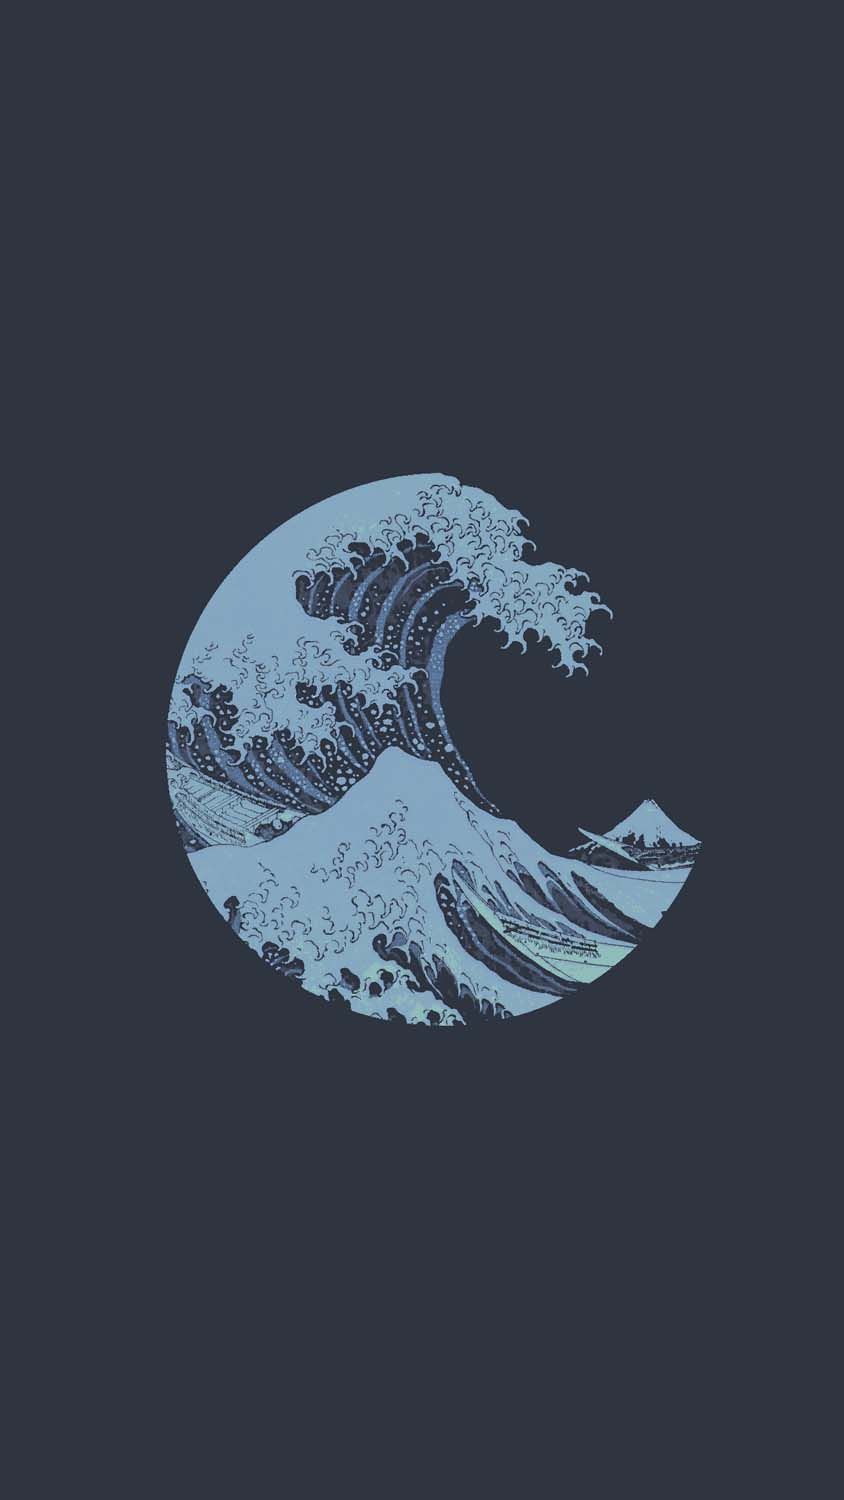 The great wave off kanagawa wallpaper - Minimalist, wave, ocean